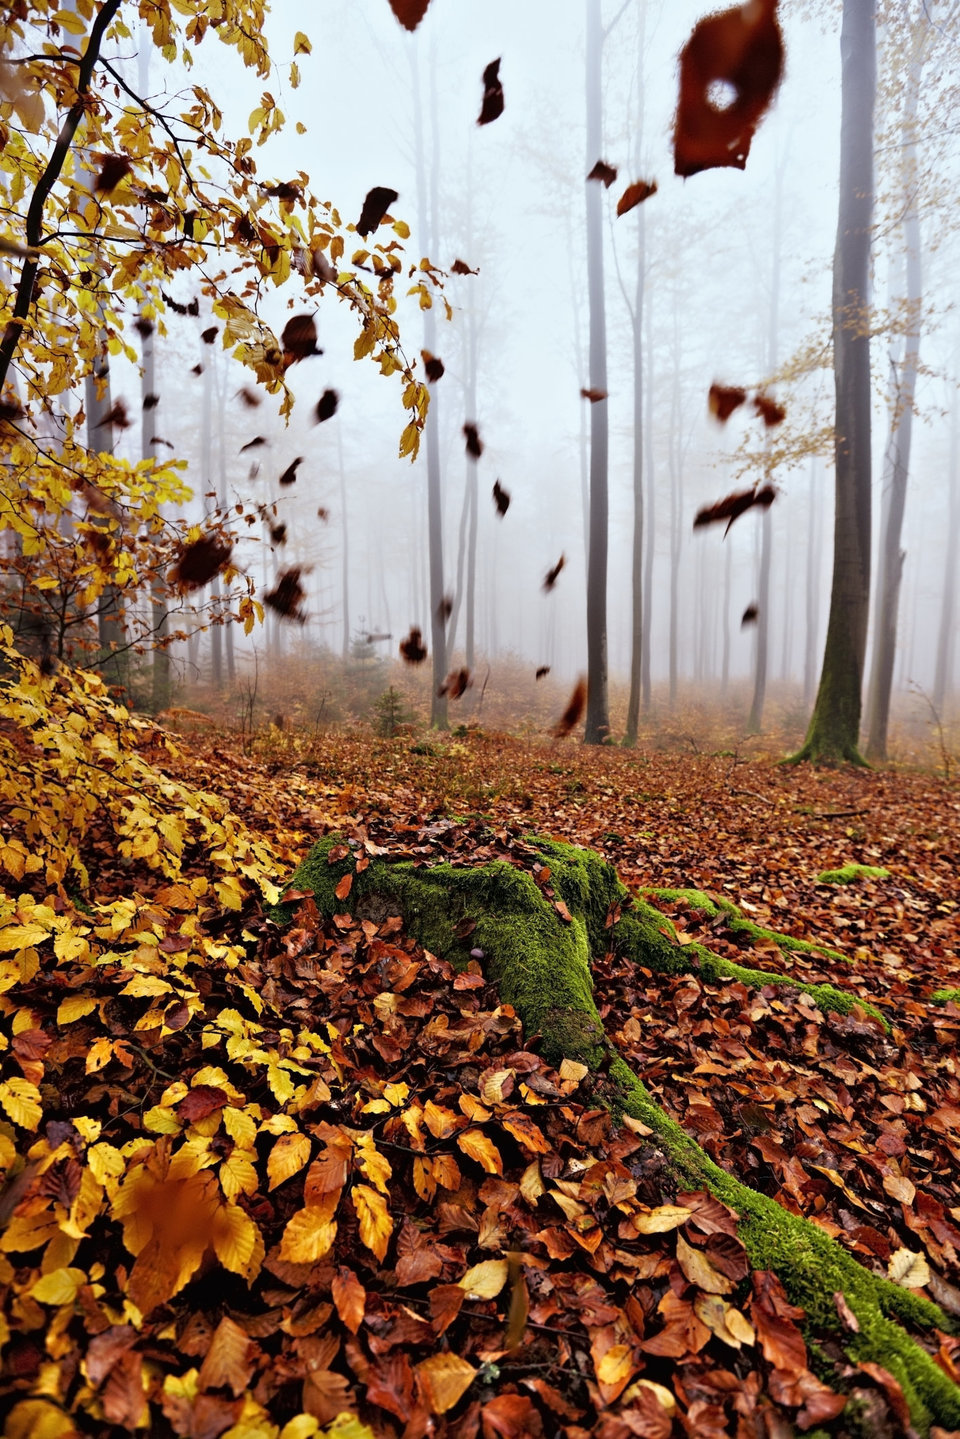 Falling leaves in misty forest